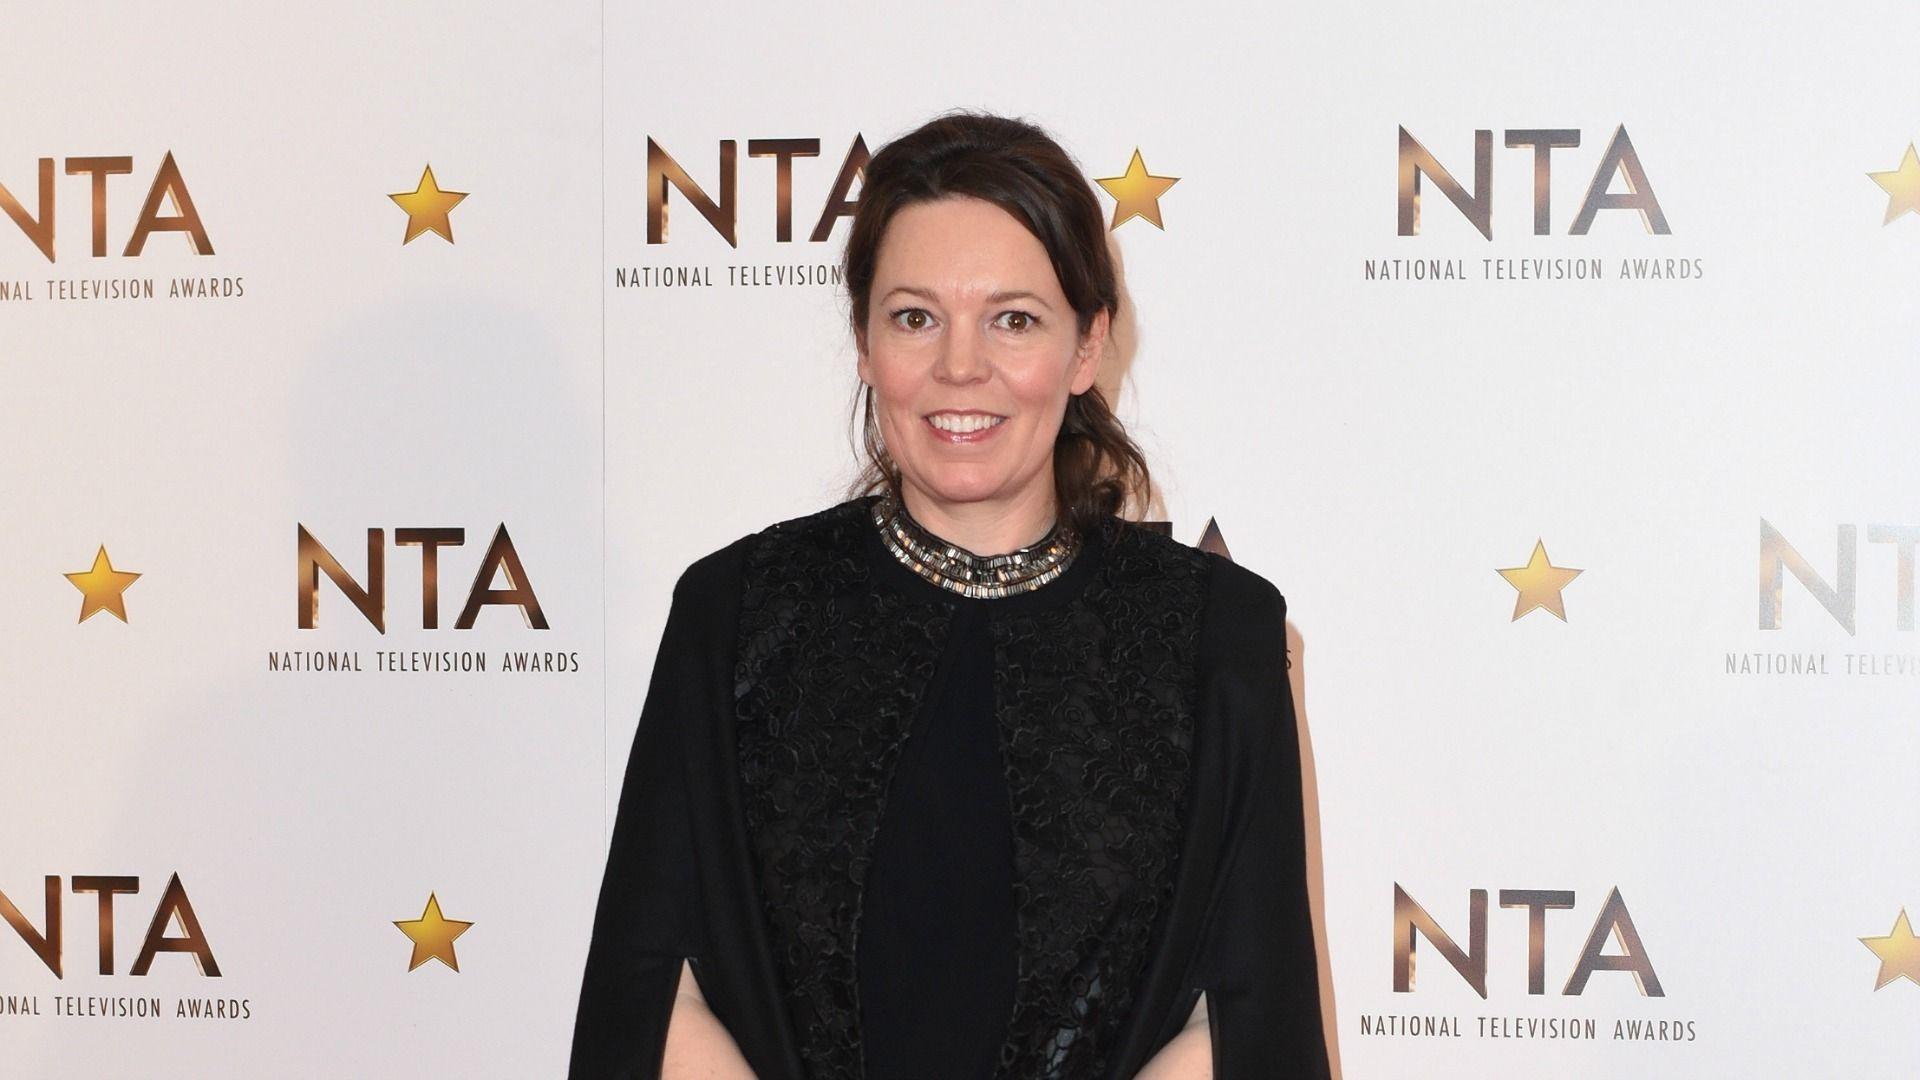 TV BAFTA awards 2015: We predict the winners